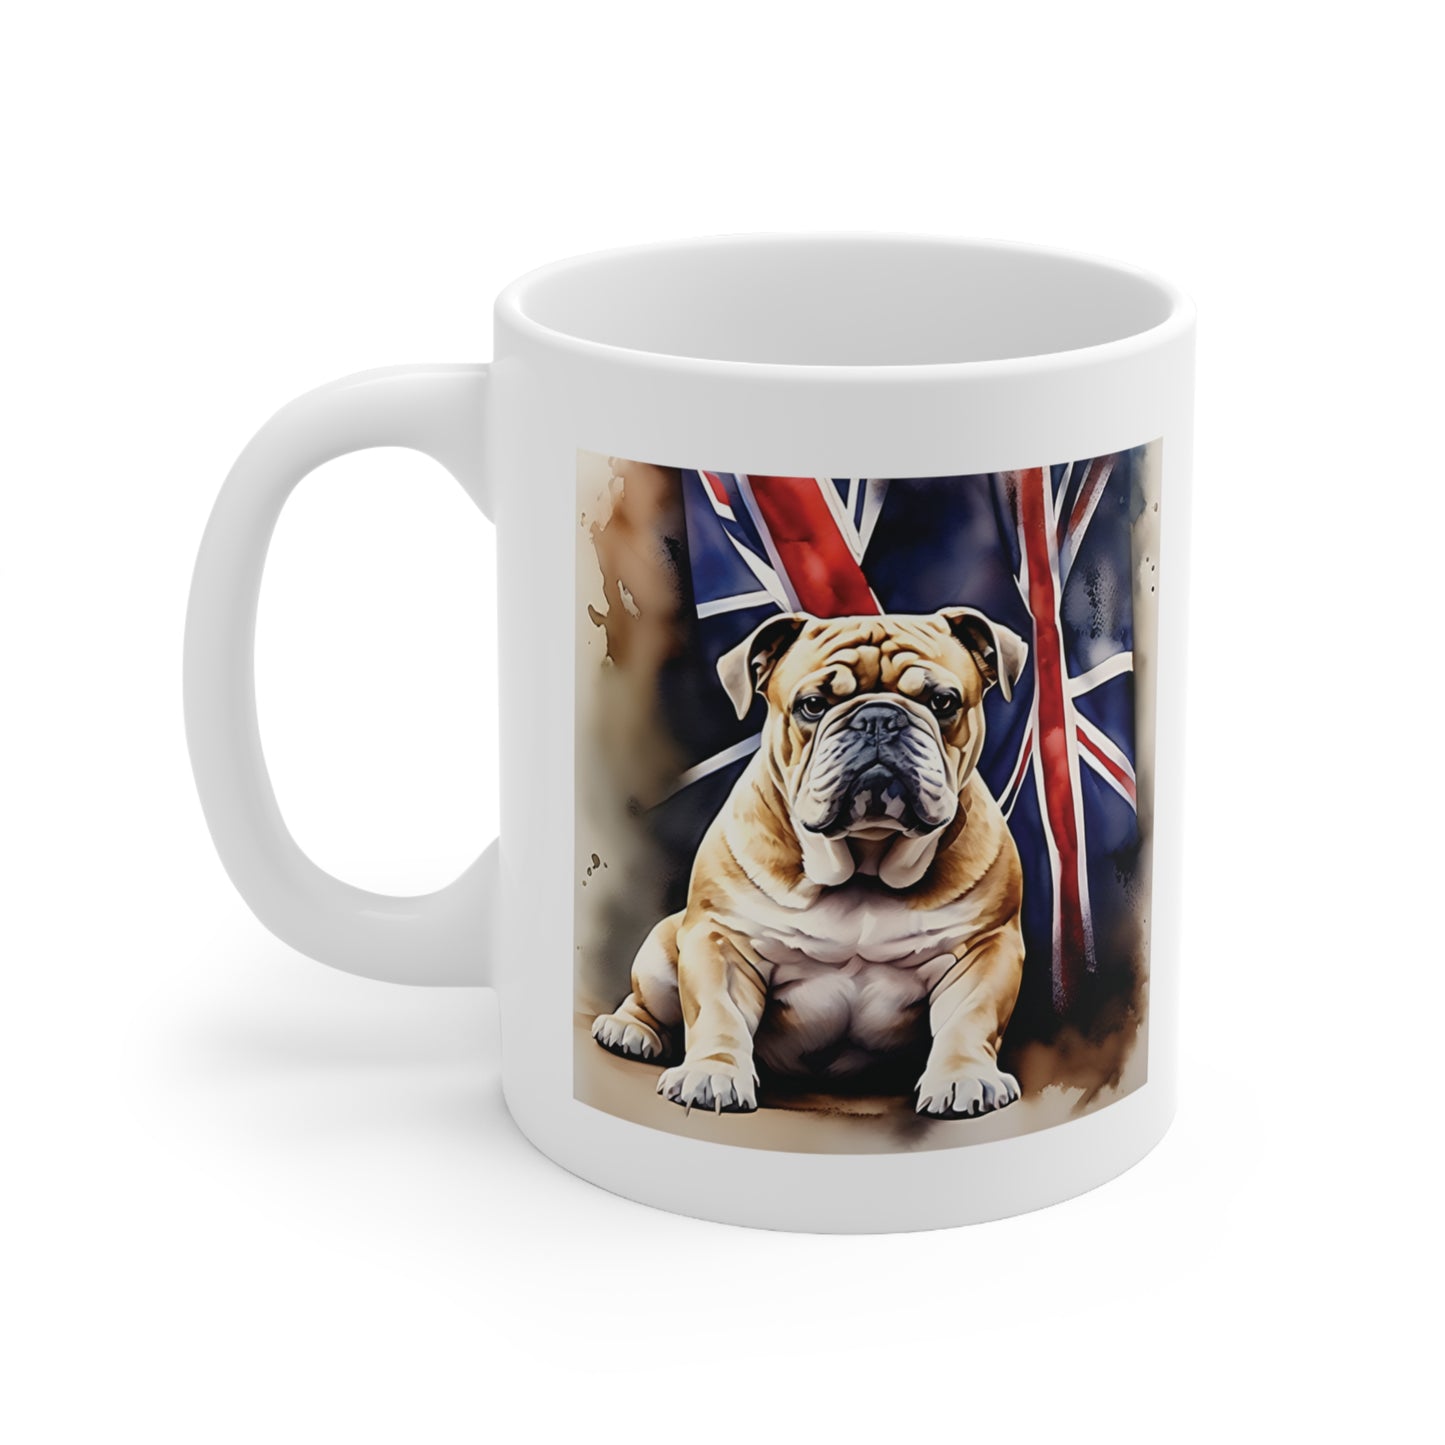 British Bulldog and Union Jack Flag Coffee Mug